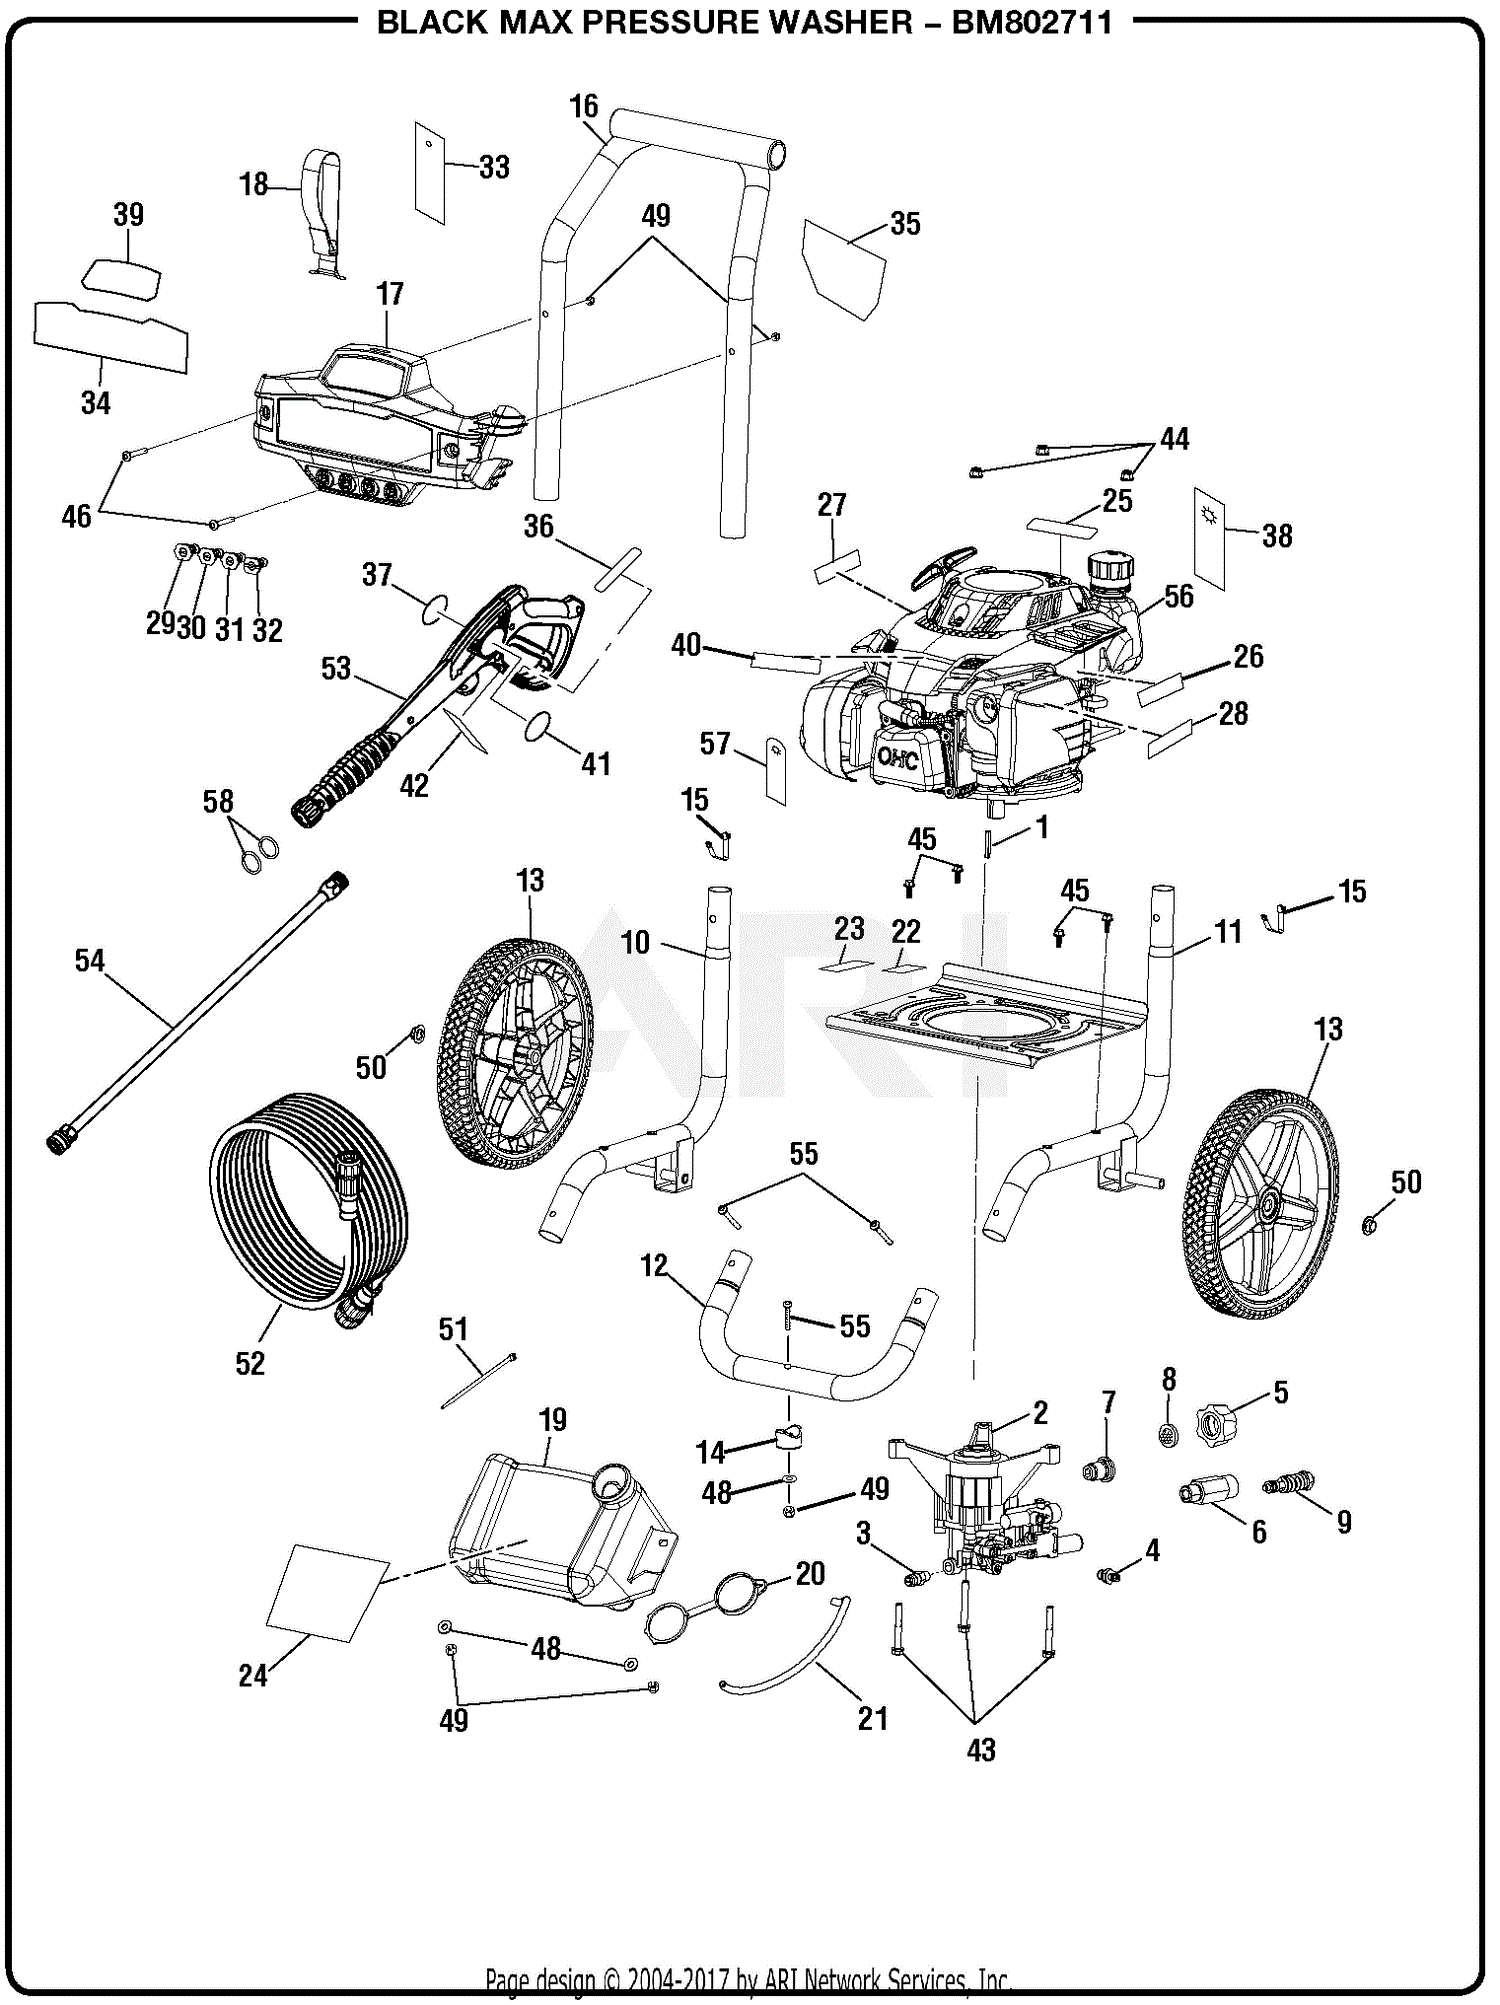 https://az417944.vo.msecnd.net/diagrams/manufacturer/green-machine/black-max/pressure-washers/bm802711-pressure-washer-mfg-no-090079304/general-assembly/diagram.gif